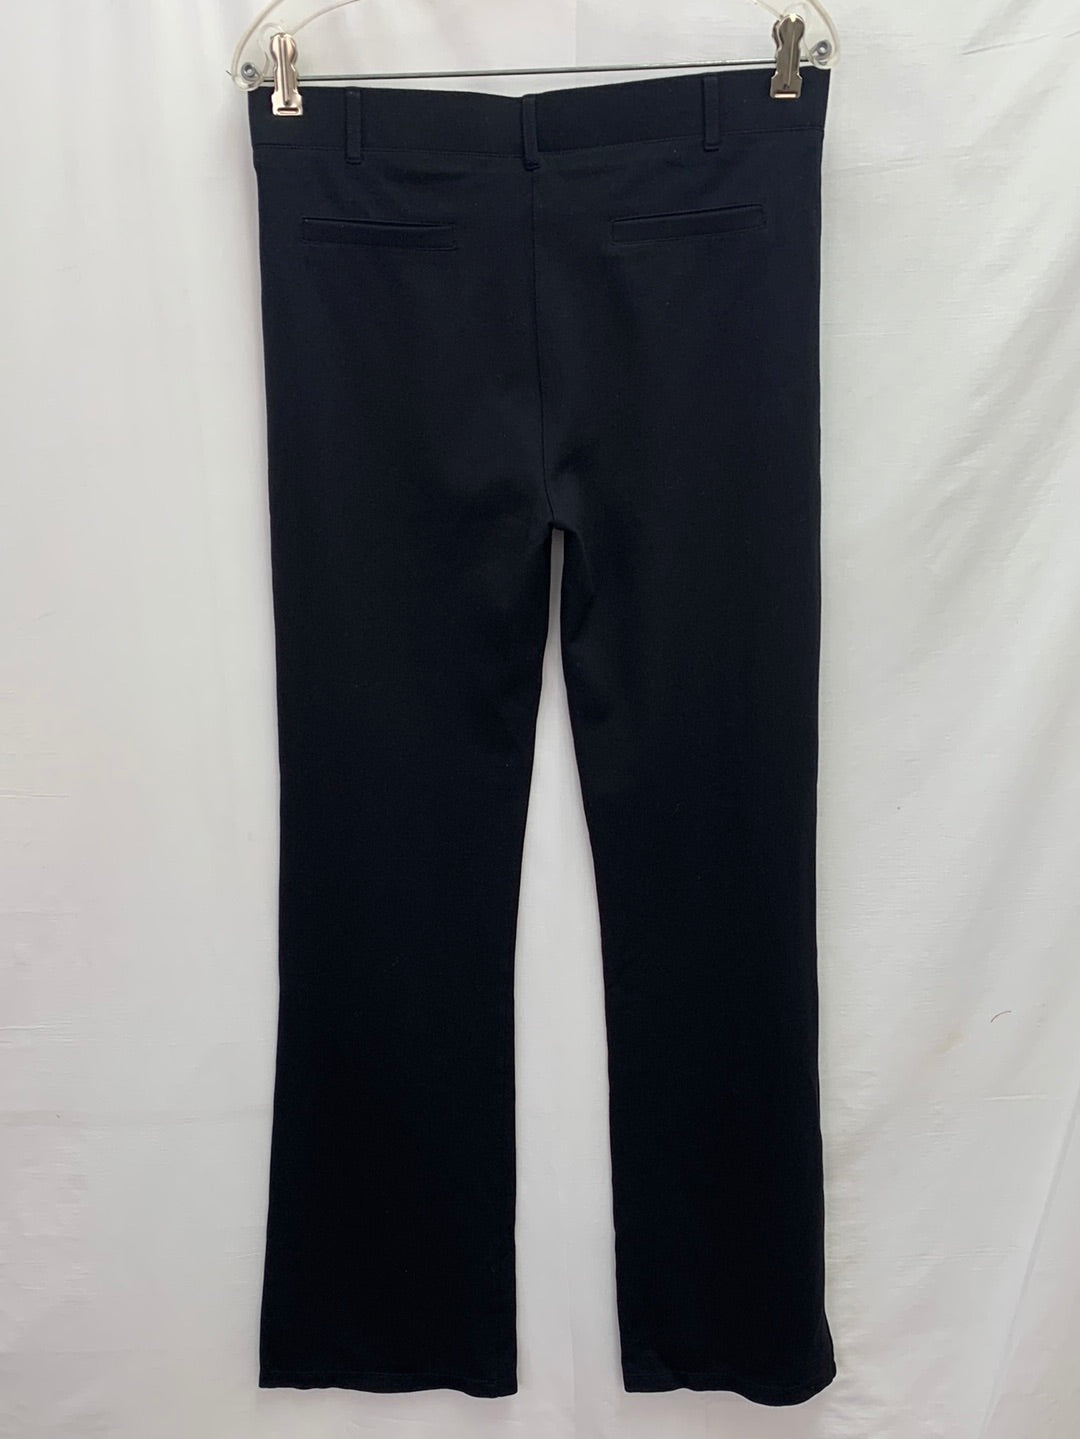 BETABRAND black Boot-Cut Classic Dress Pant Yoga Pants - Large Long